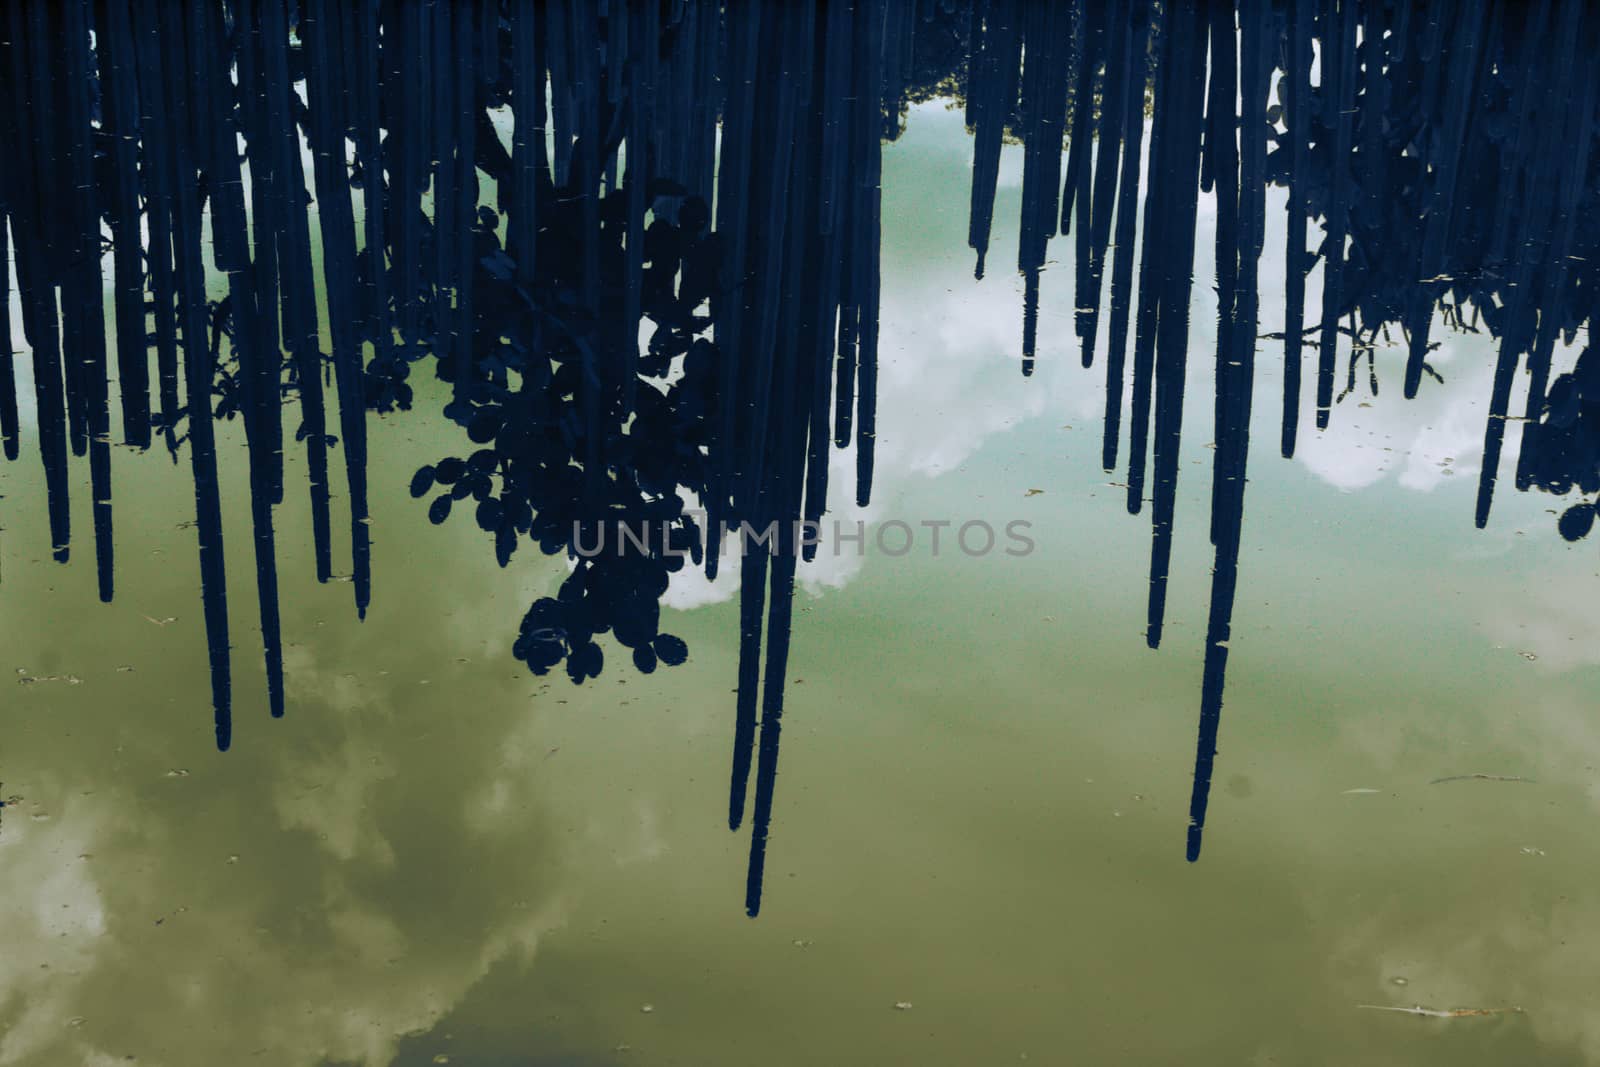 Cactus reflecting on a lake by bernardojbp